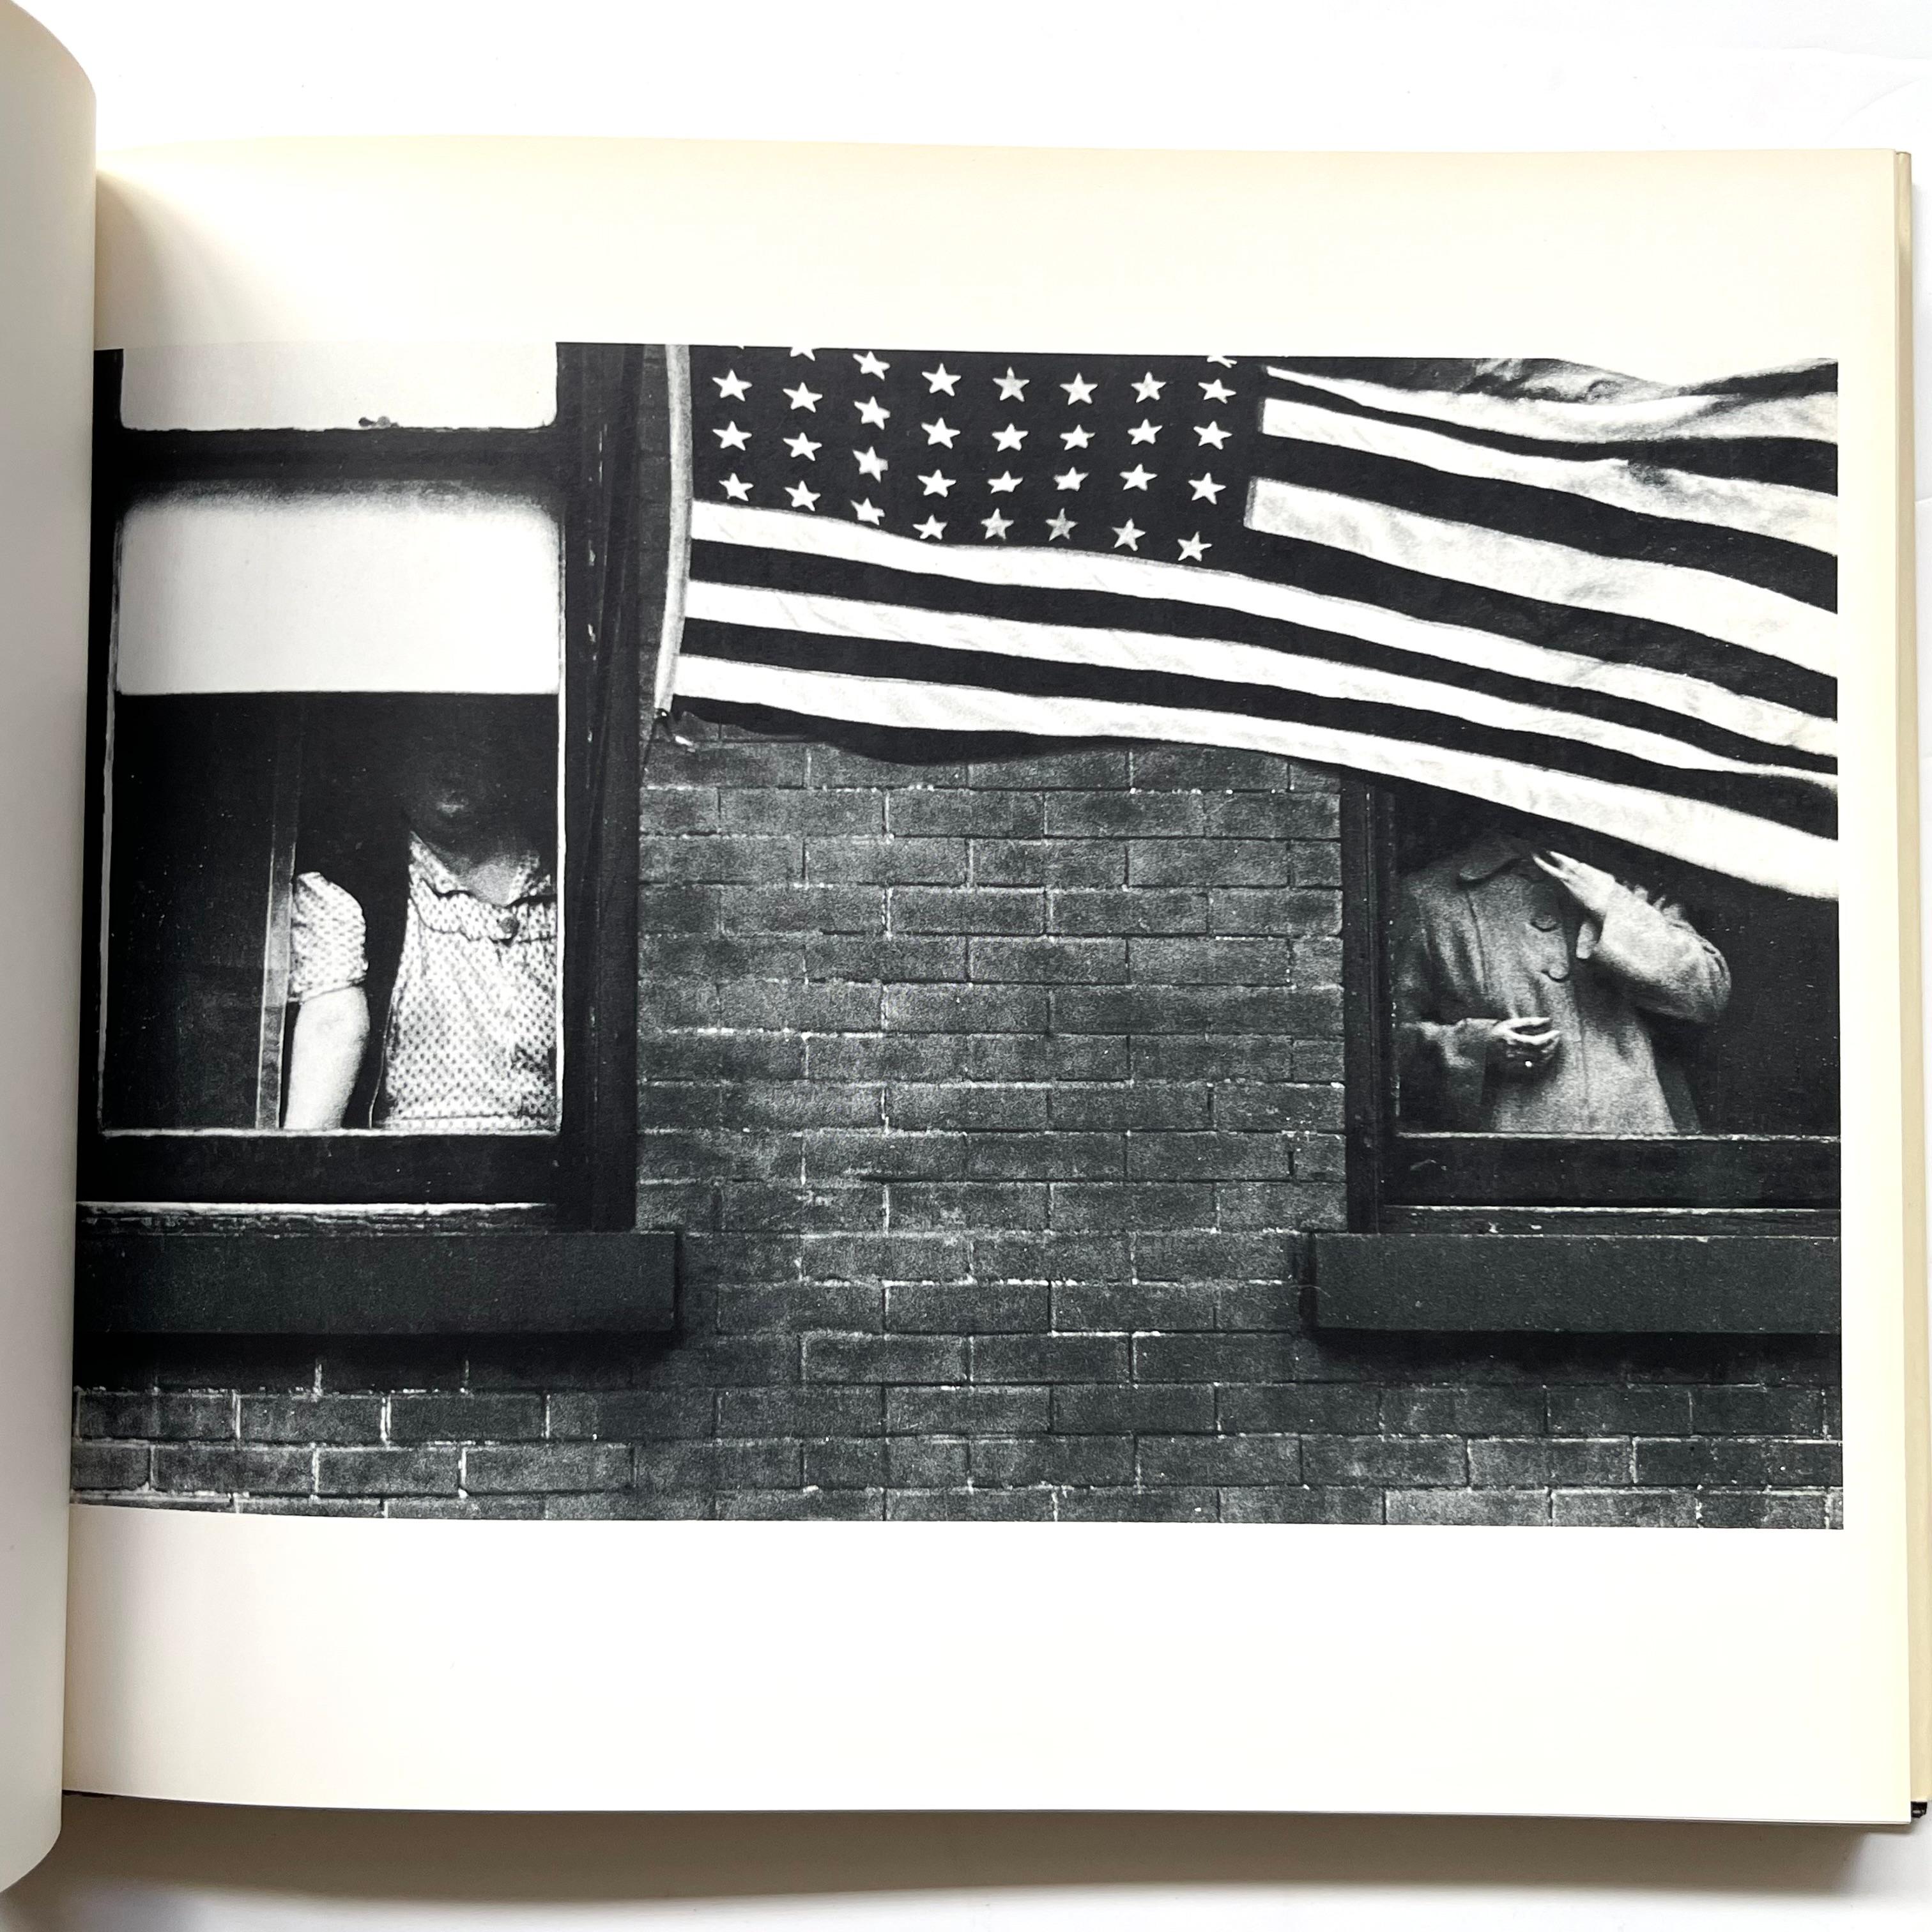 The Americans Robert Frank, Jack Kerouac 1st Enlarged Ed. 1969, The Americans 3